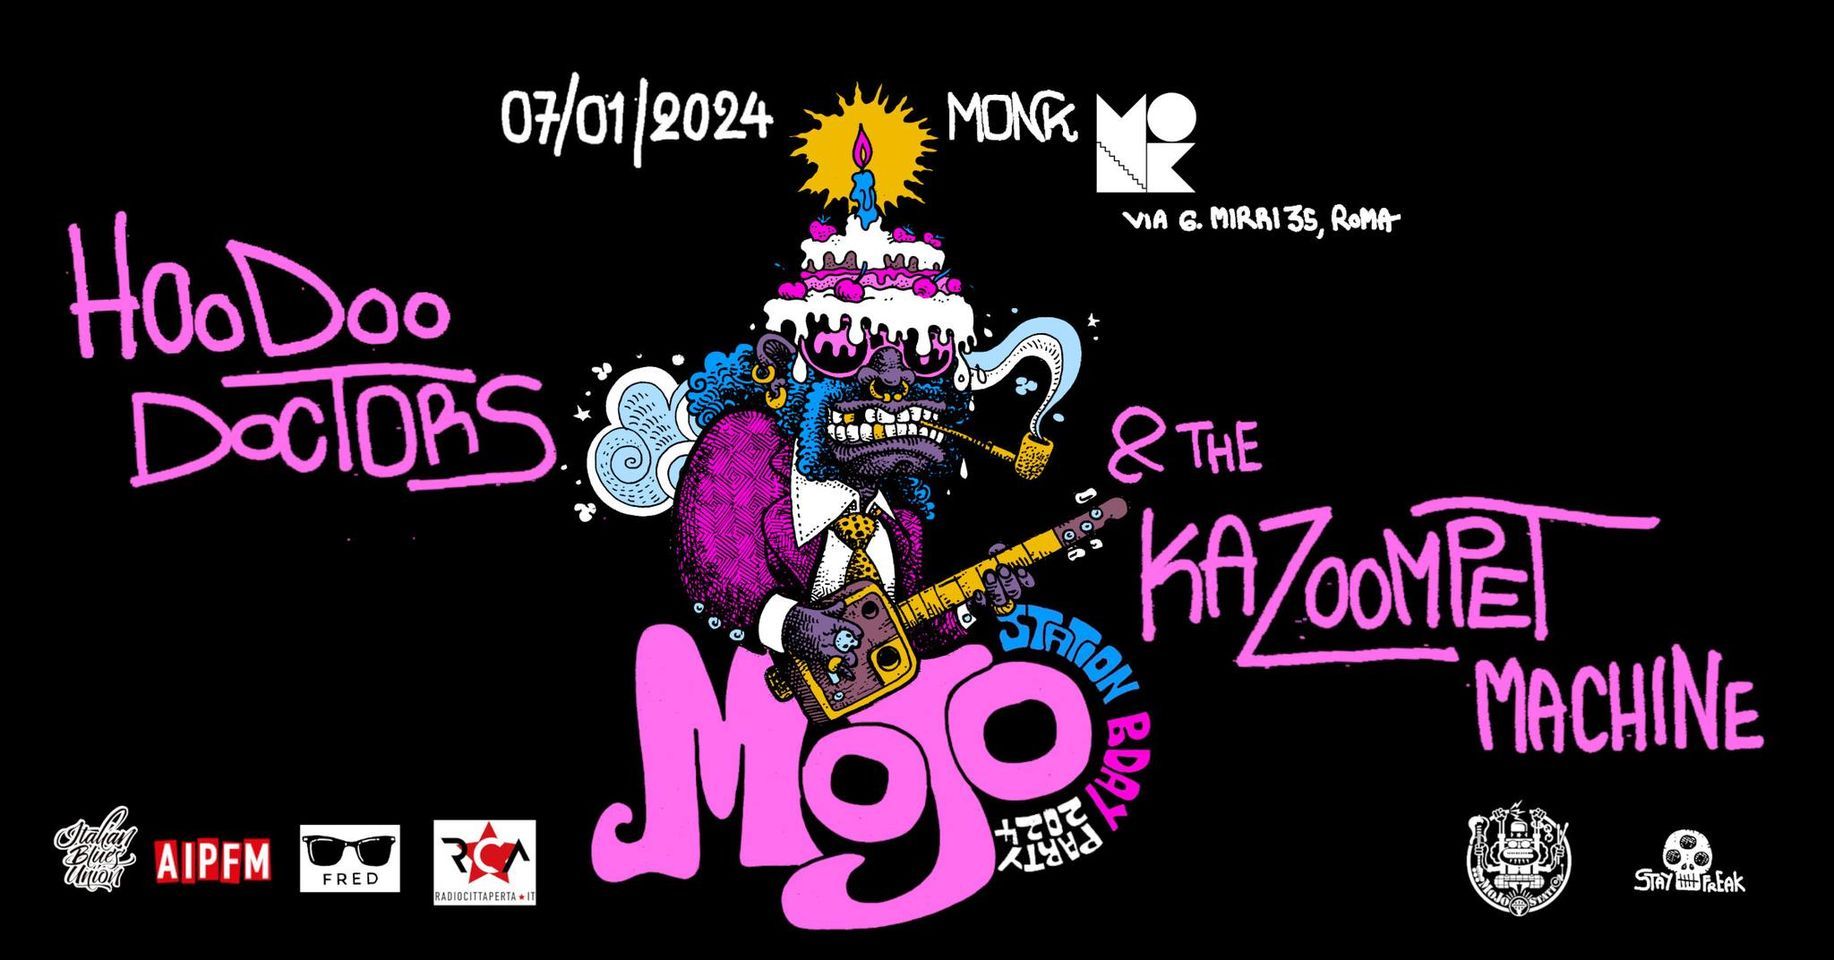 Hoodoo Doctors live @MojoStation bday party